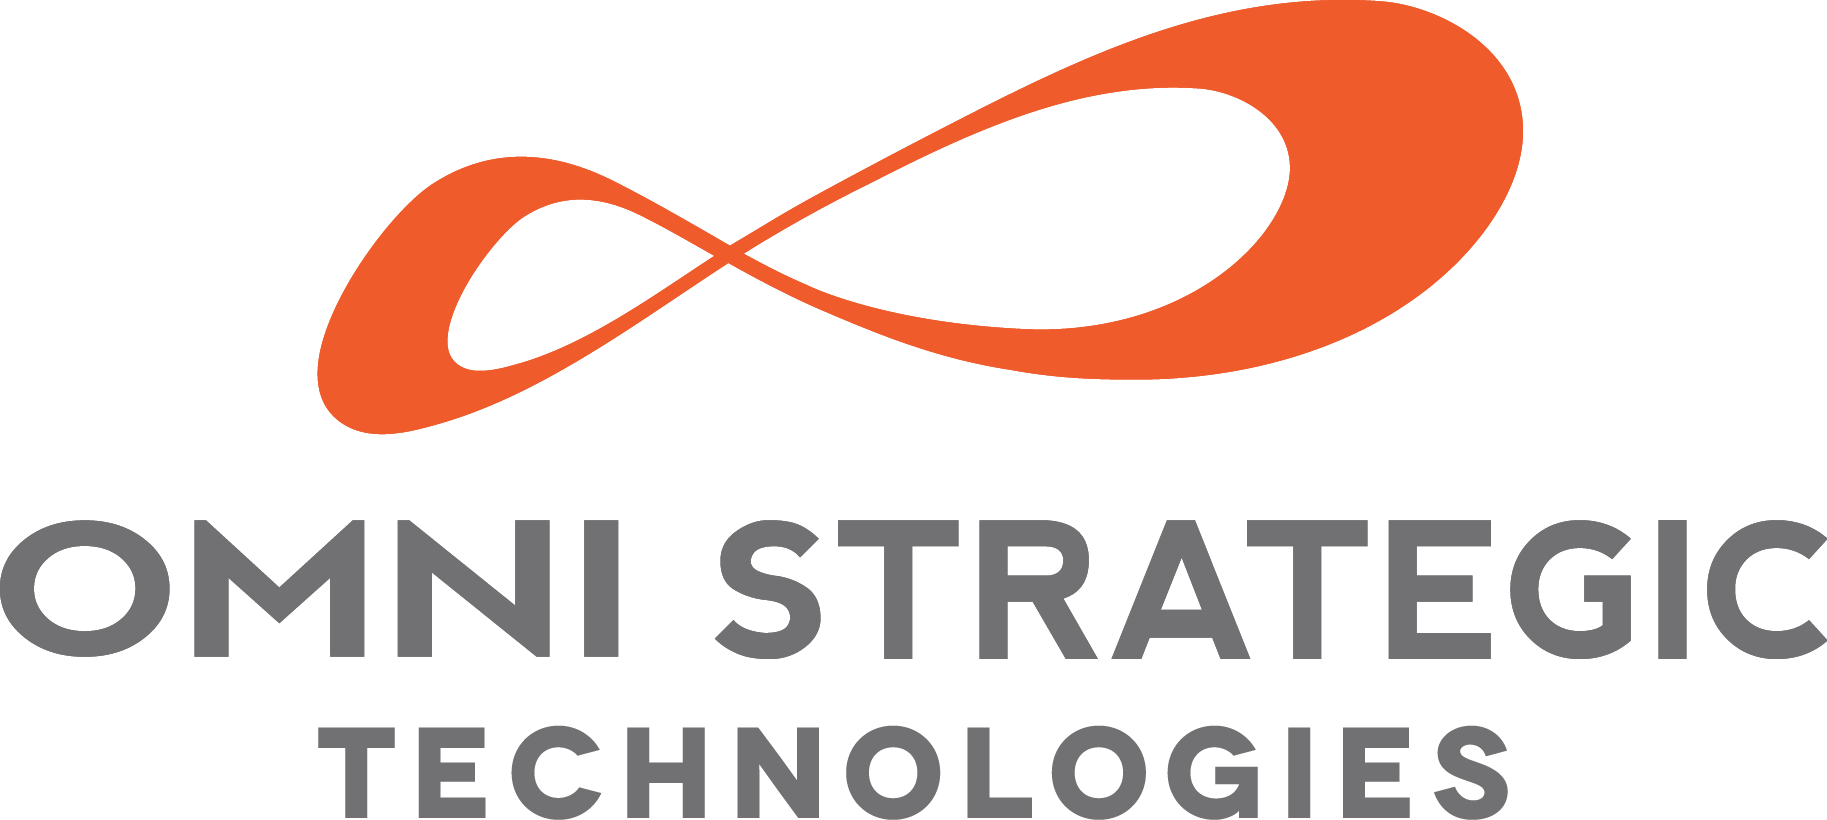 Omni Strategic Technologies, Inc.